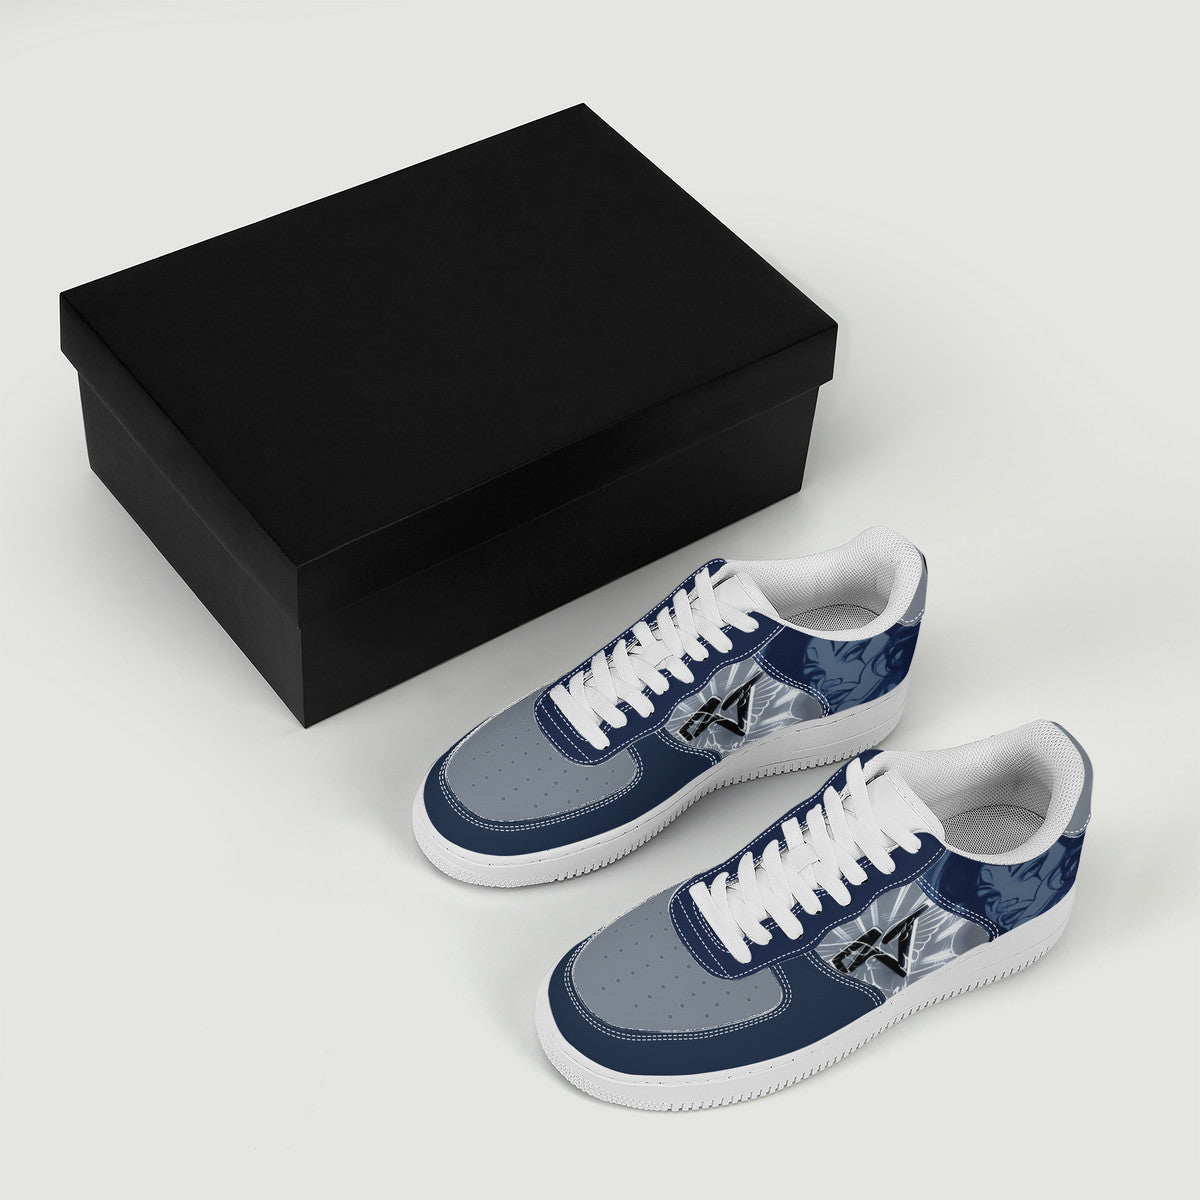 RVT Low Top Unisex Sneaker- Black/blue